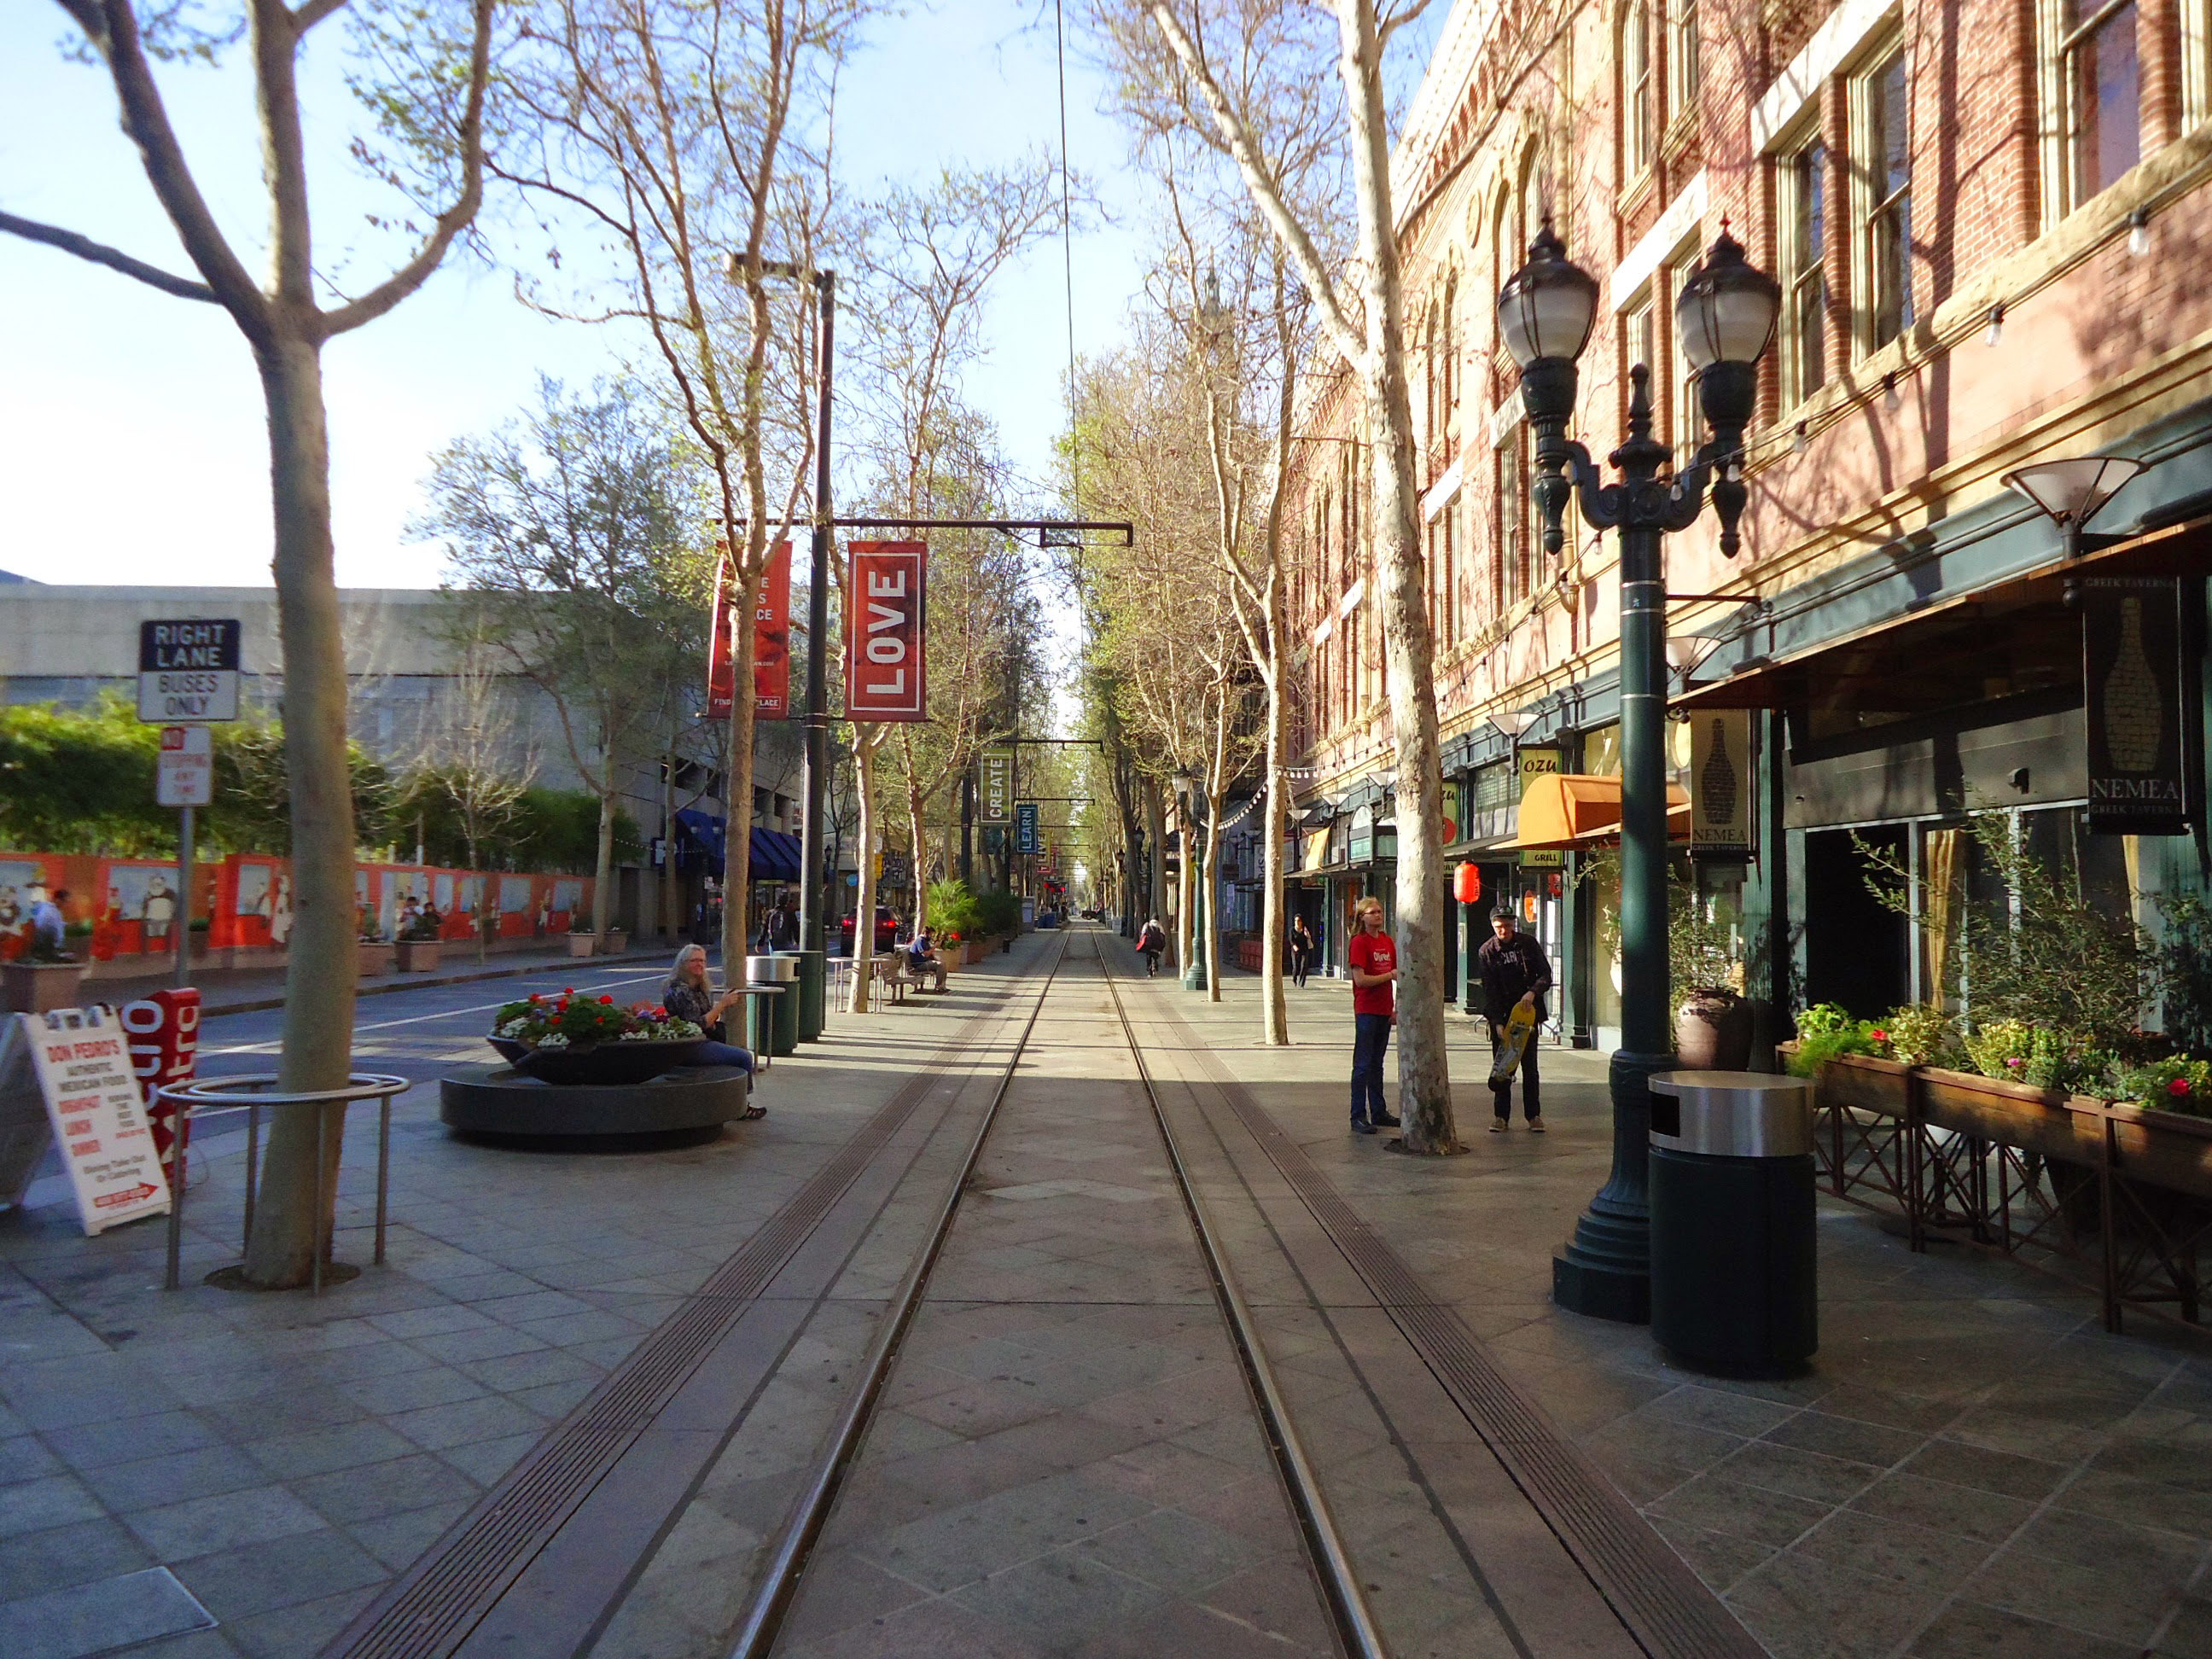 Downtown San Jose Sidewalk In San Jose California With Trees And